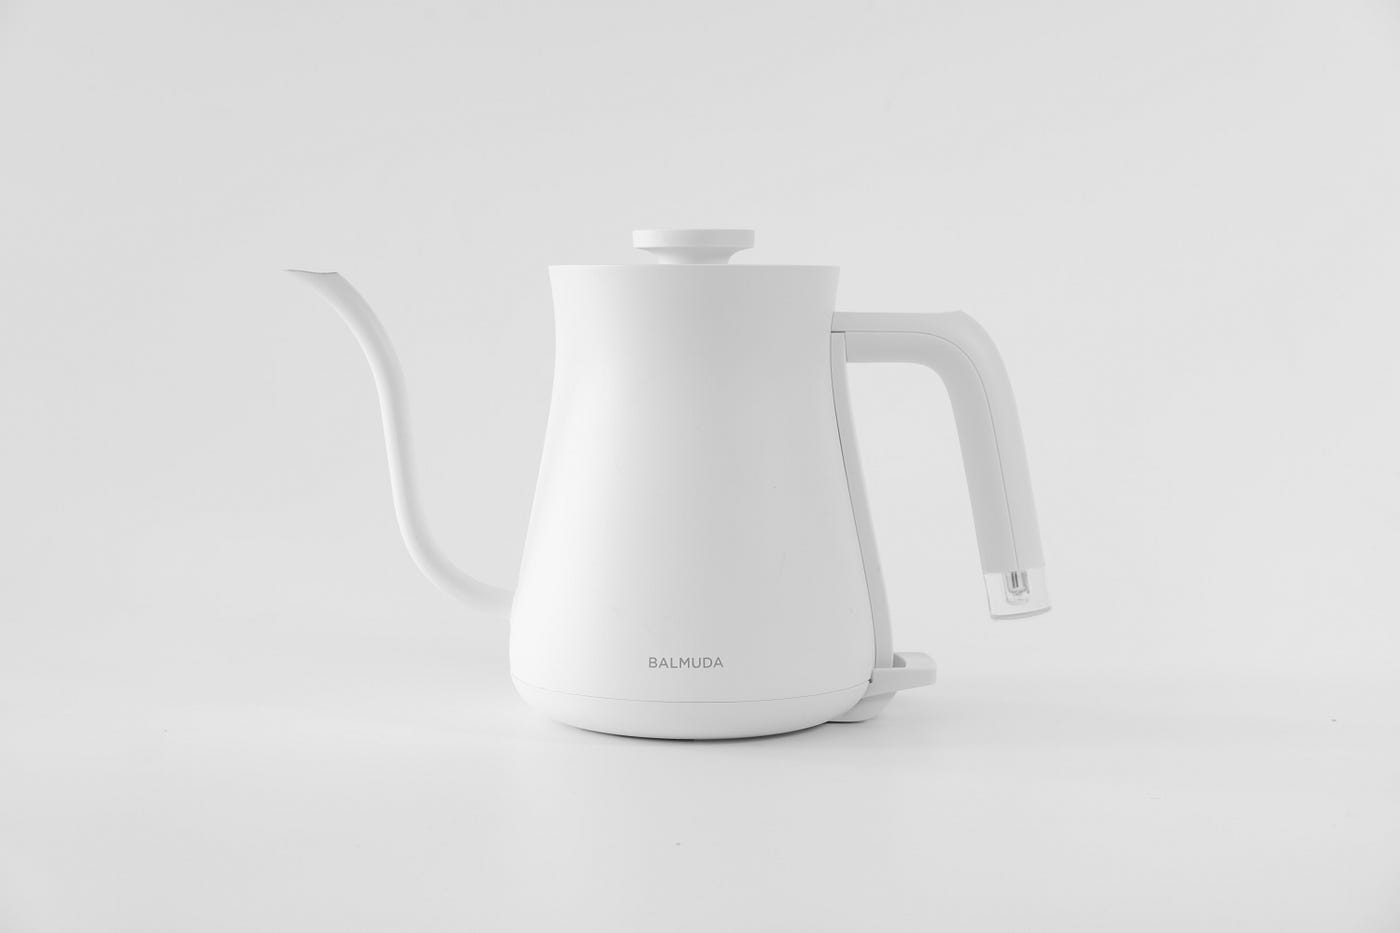 2022 model] Balmuda The Pot Electric Kettle White BALMUDA The Pot